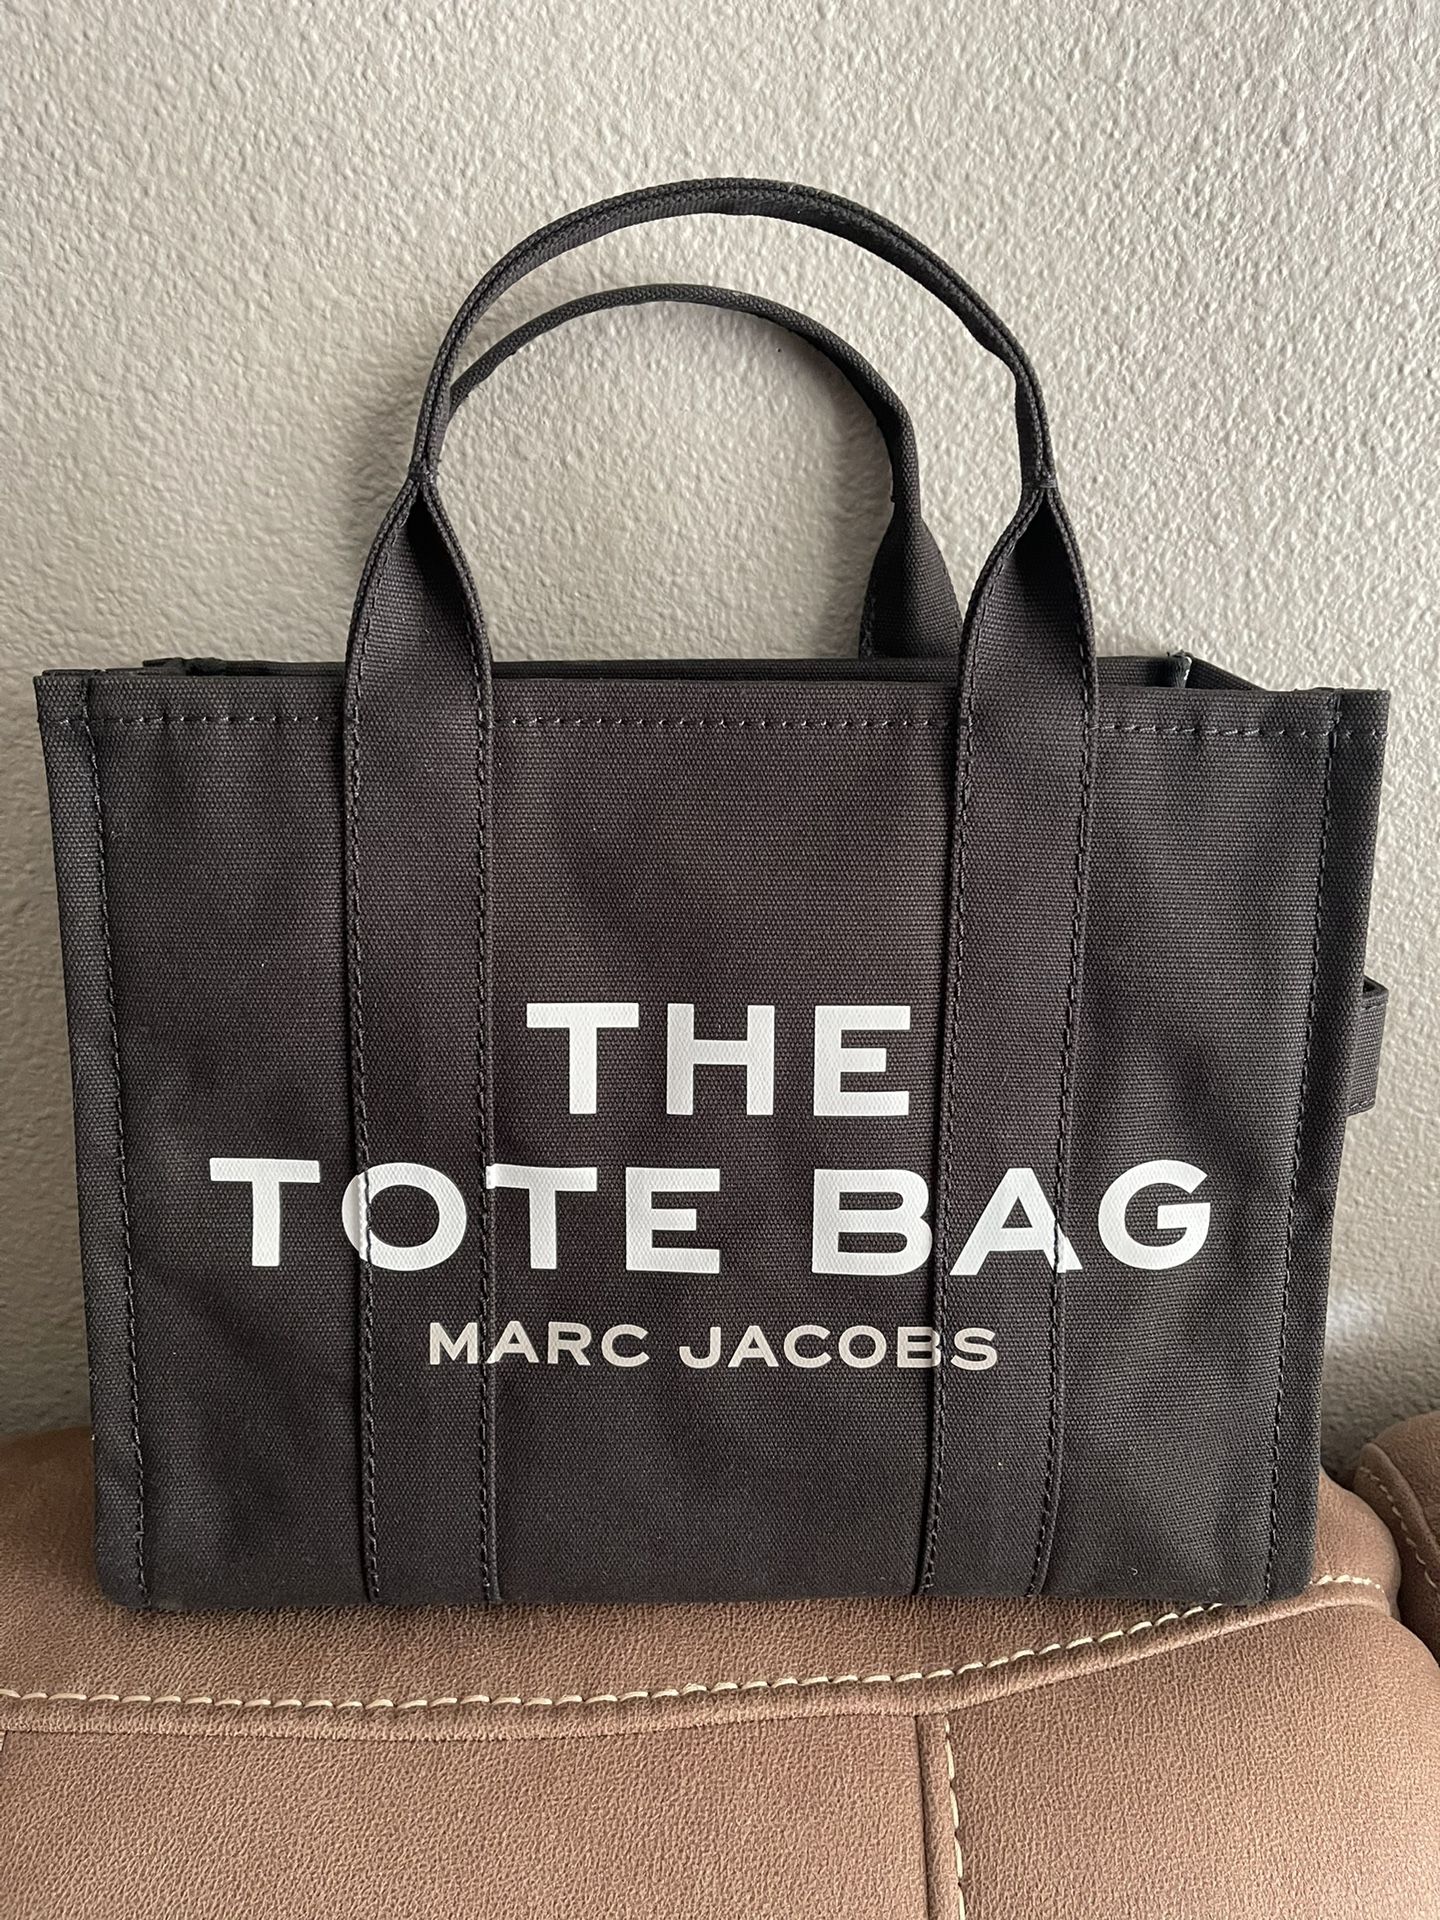 Marc Jacobs Medium Tote Bag.